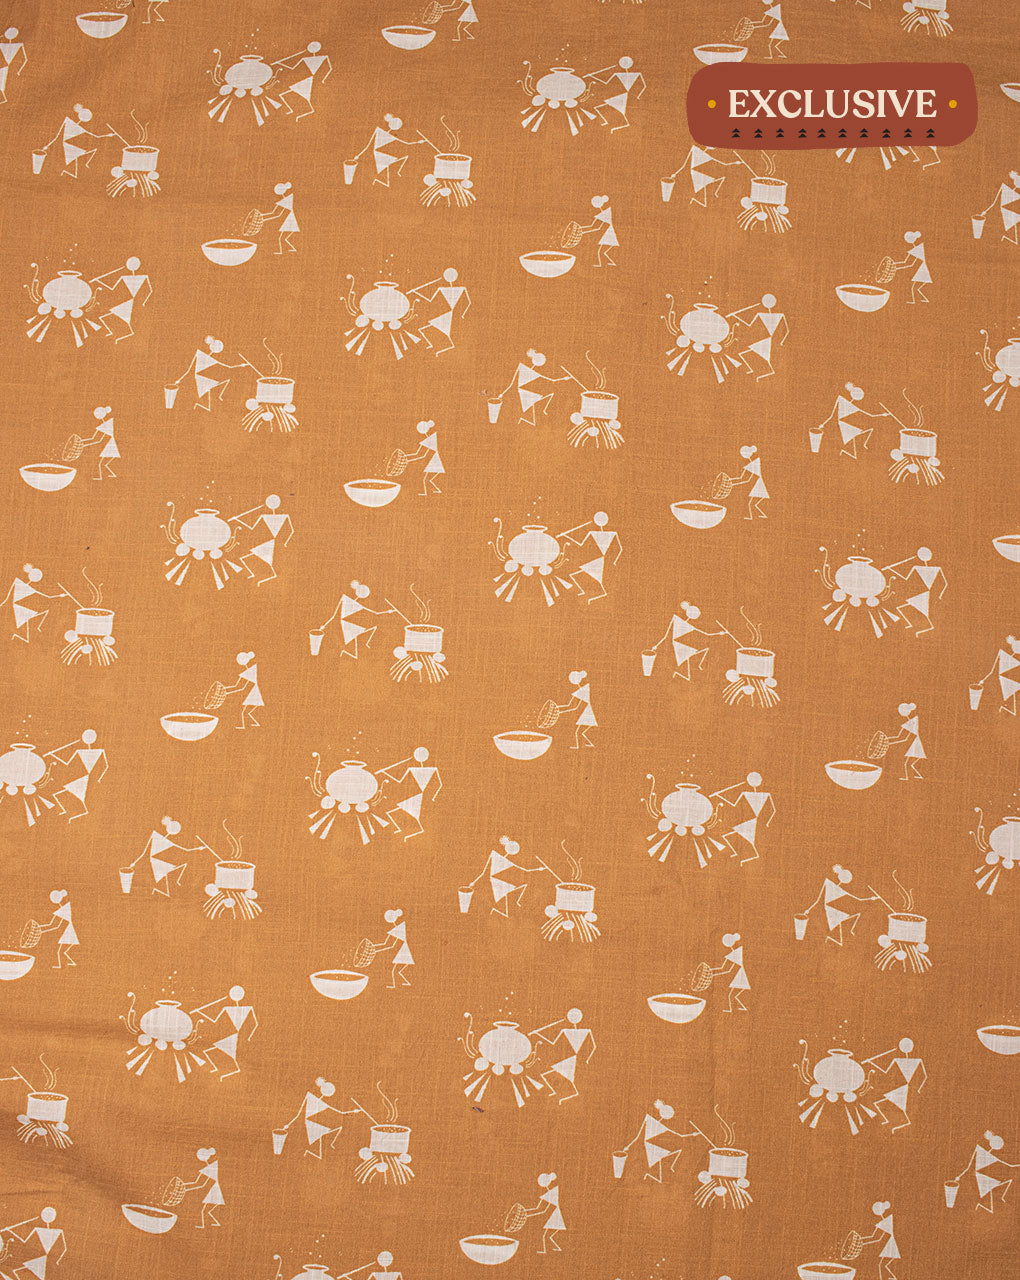 Exclusive Warli Theme Digital Print Slub Cotton Fabric - Fabriclore.com